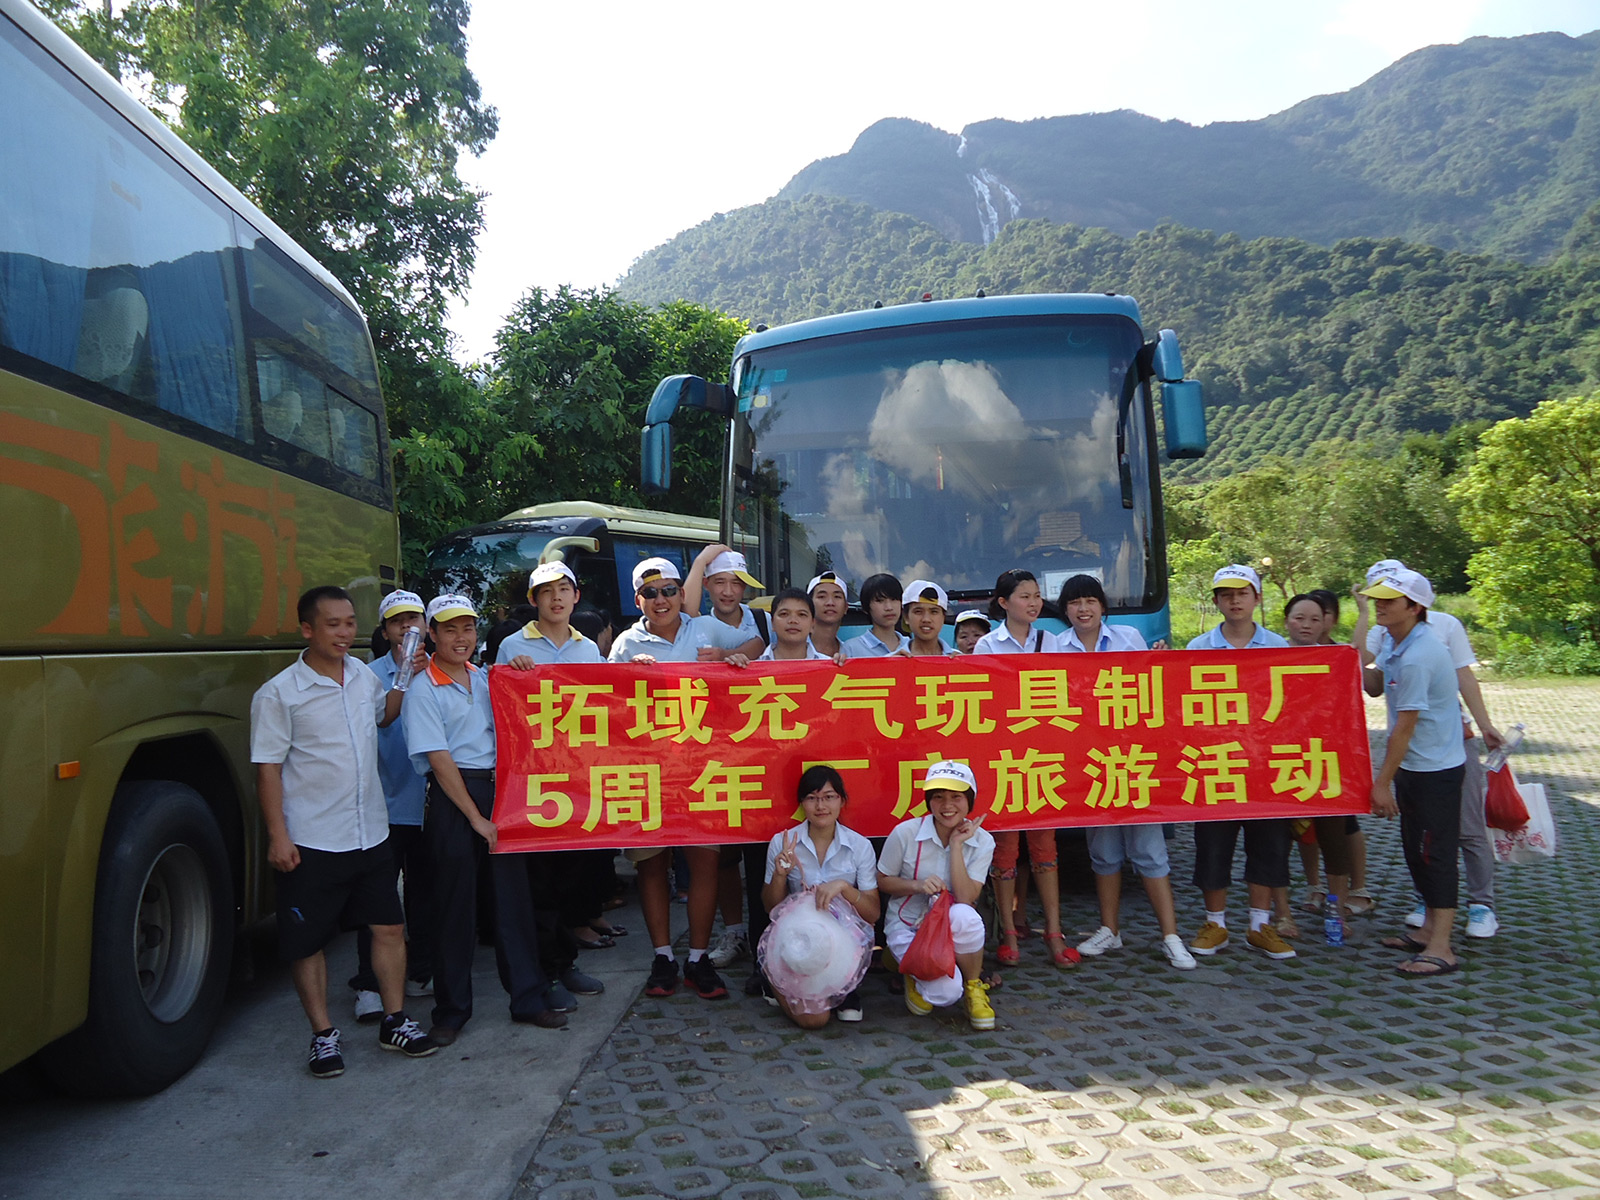 2012 5th Anniversary of Zengcheng Baishui Village